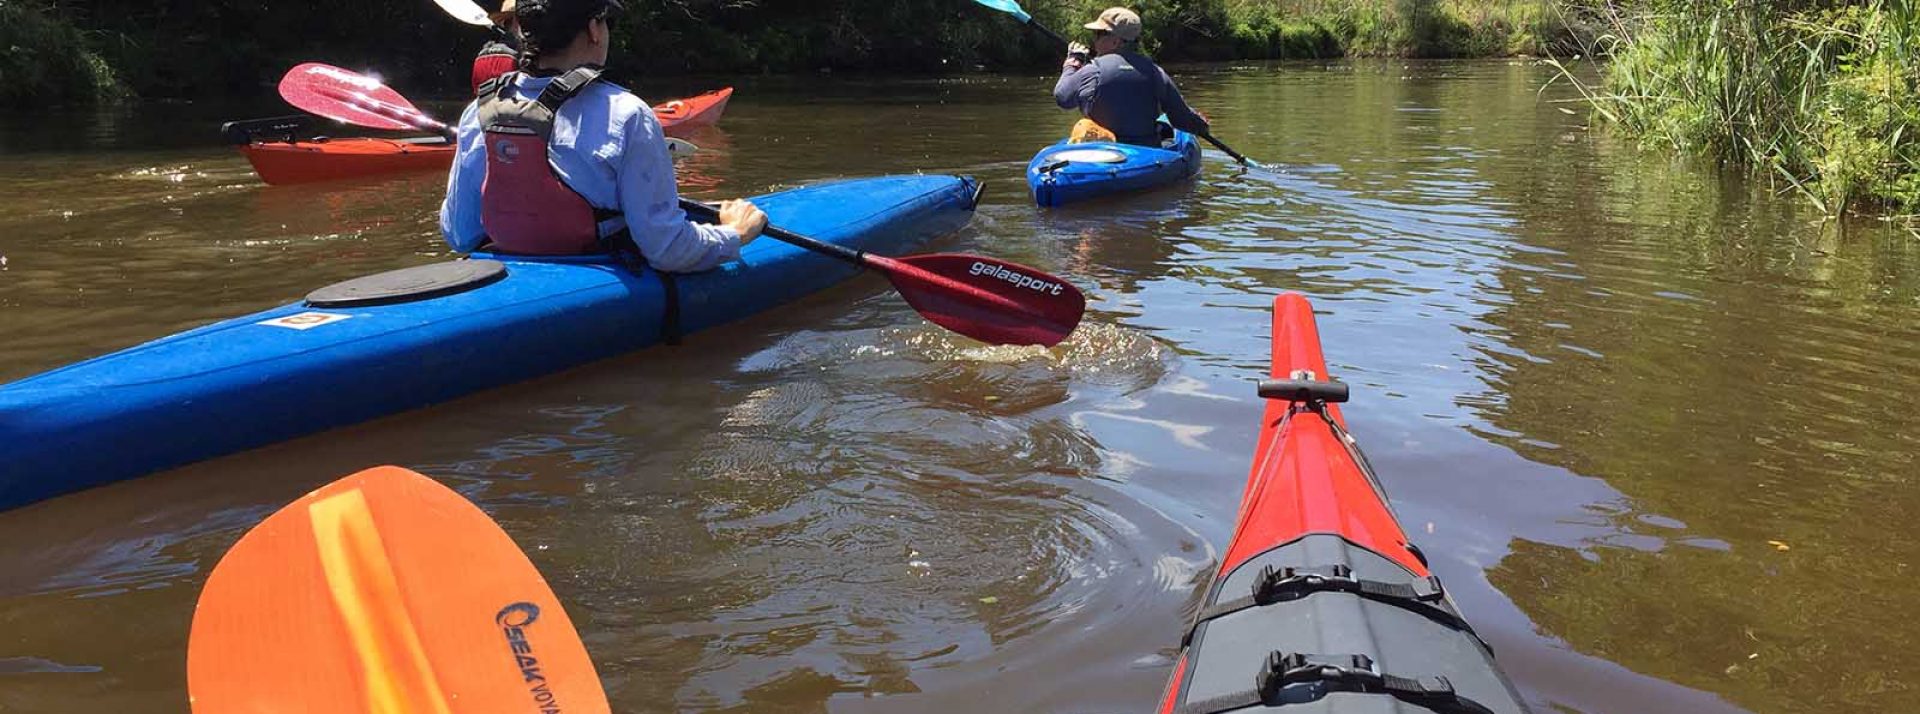 Kayaks on Wolli Creek